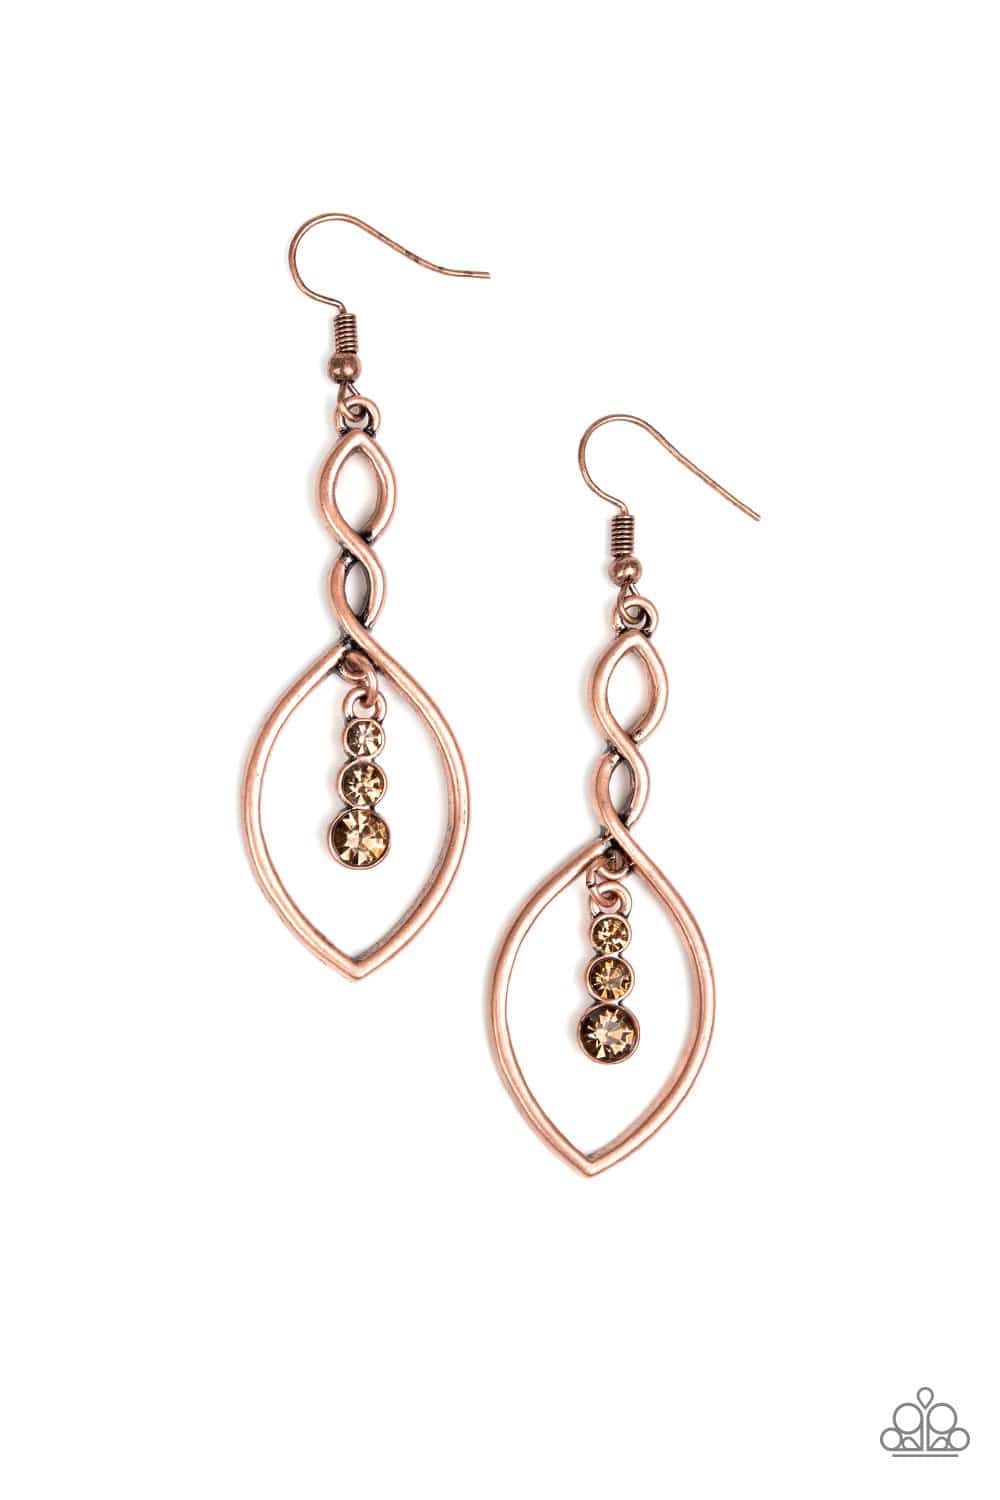 Timeless Twist - Copper Rhinestone Earrings - Paparazzi Accessories - GlaMarous Titi Jewels